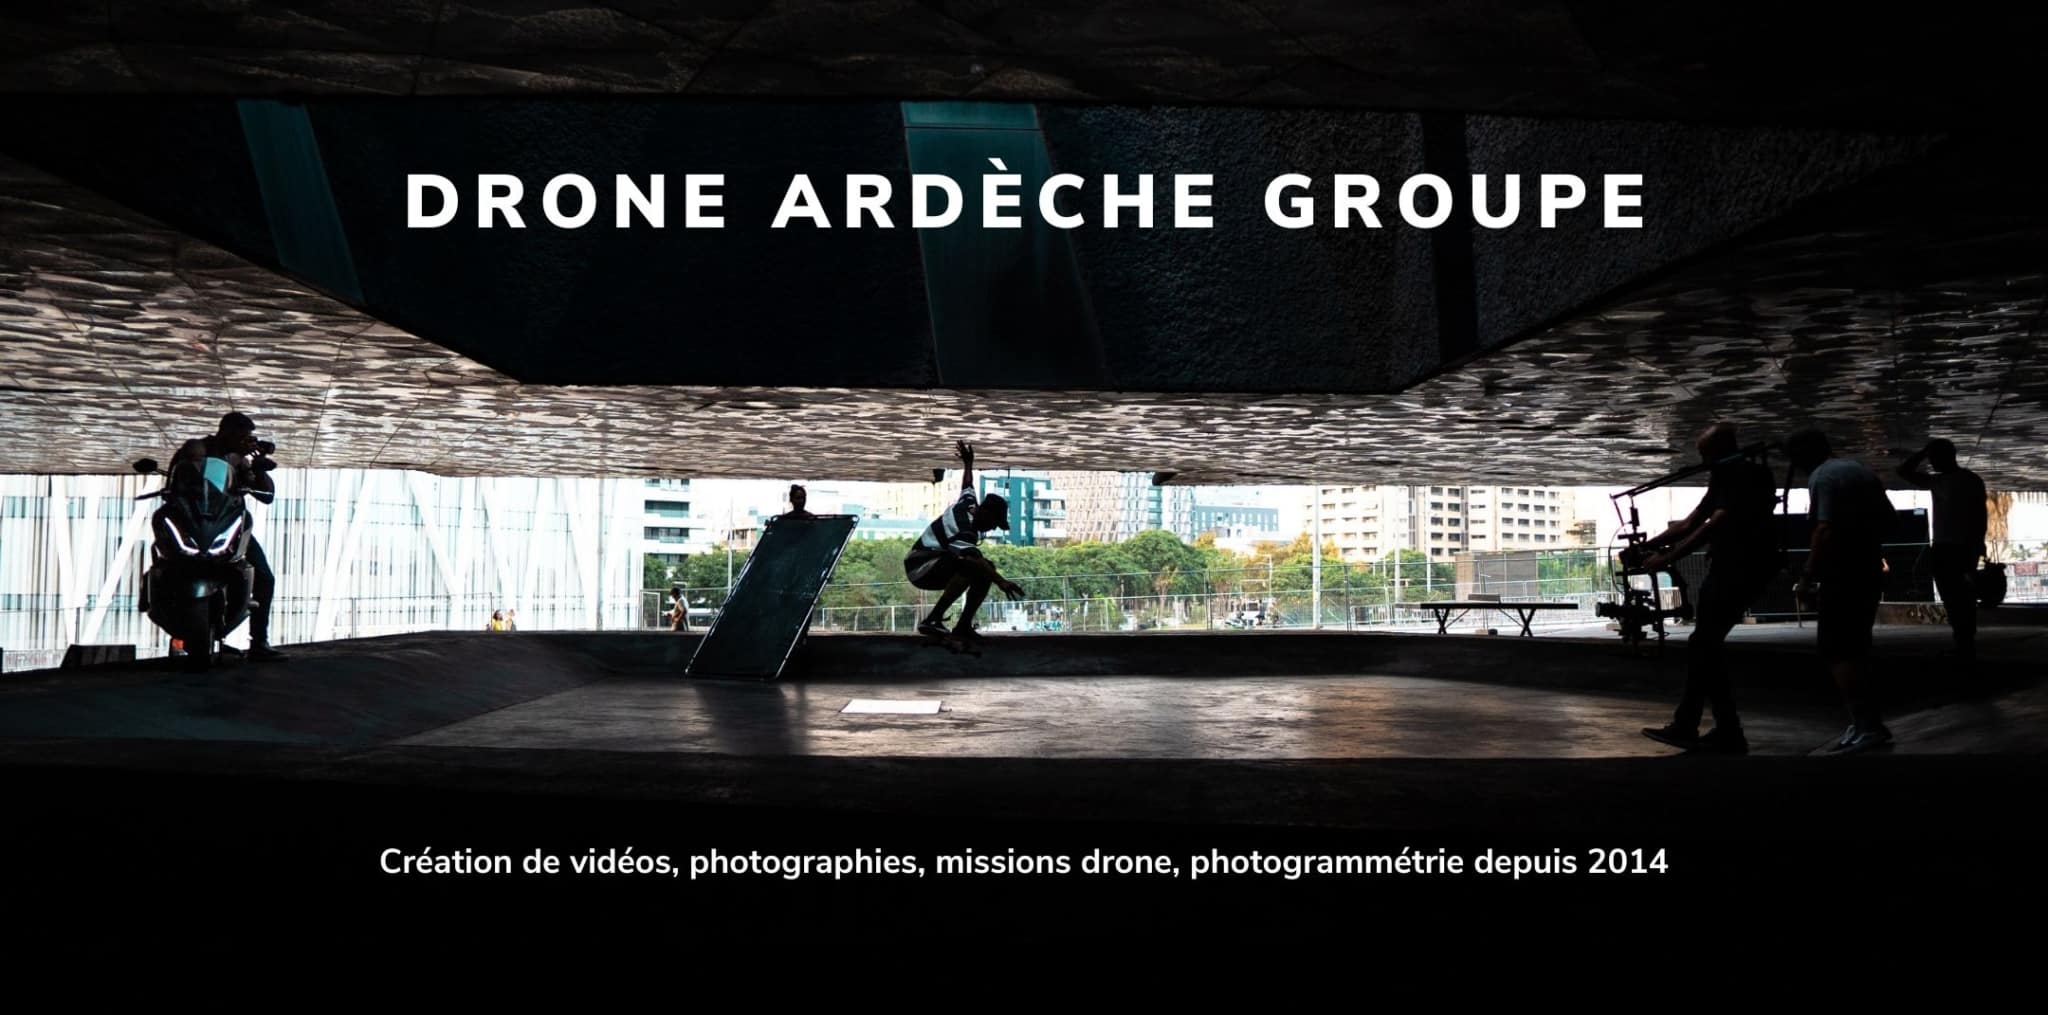 (c) Drone-ardeche.com